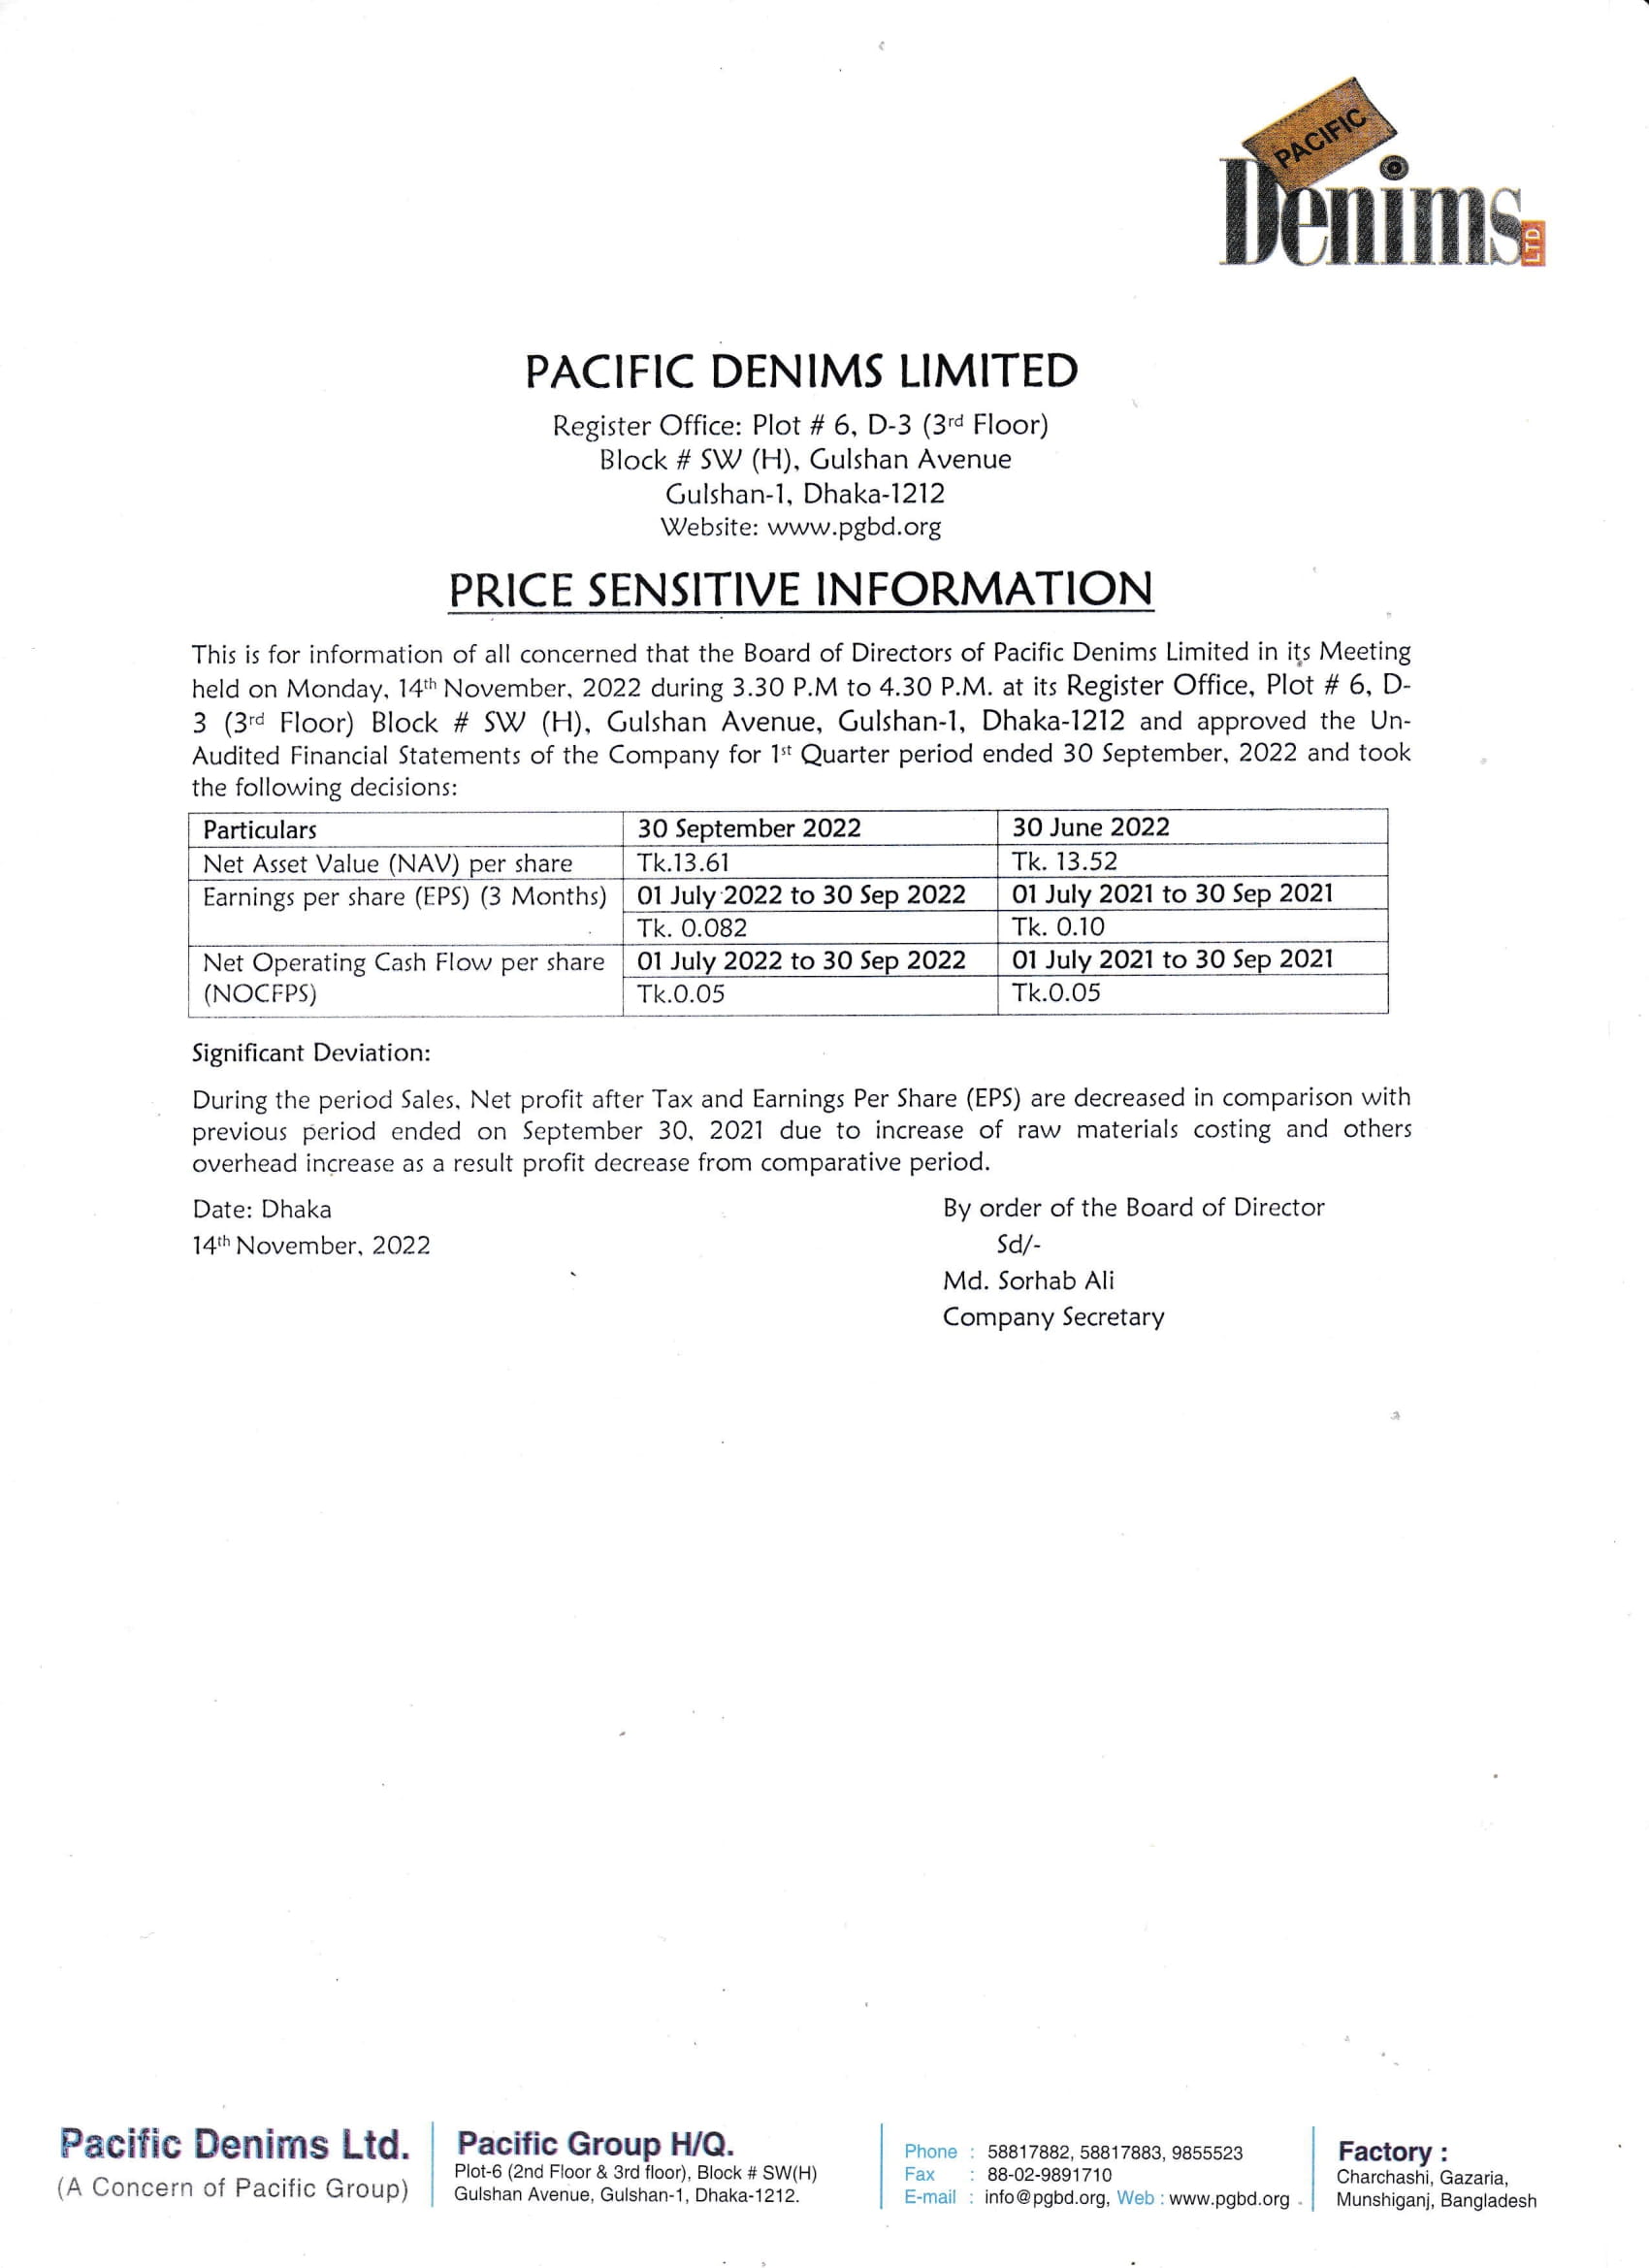 Pacific Denims Ltd. 1Q Price Sensitive Information